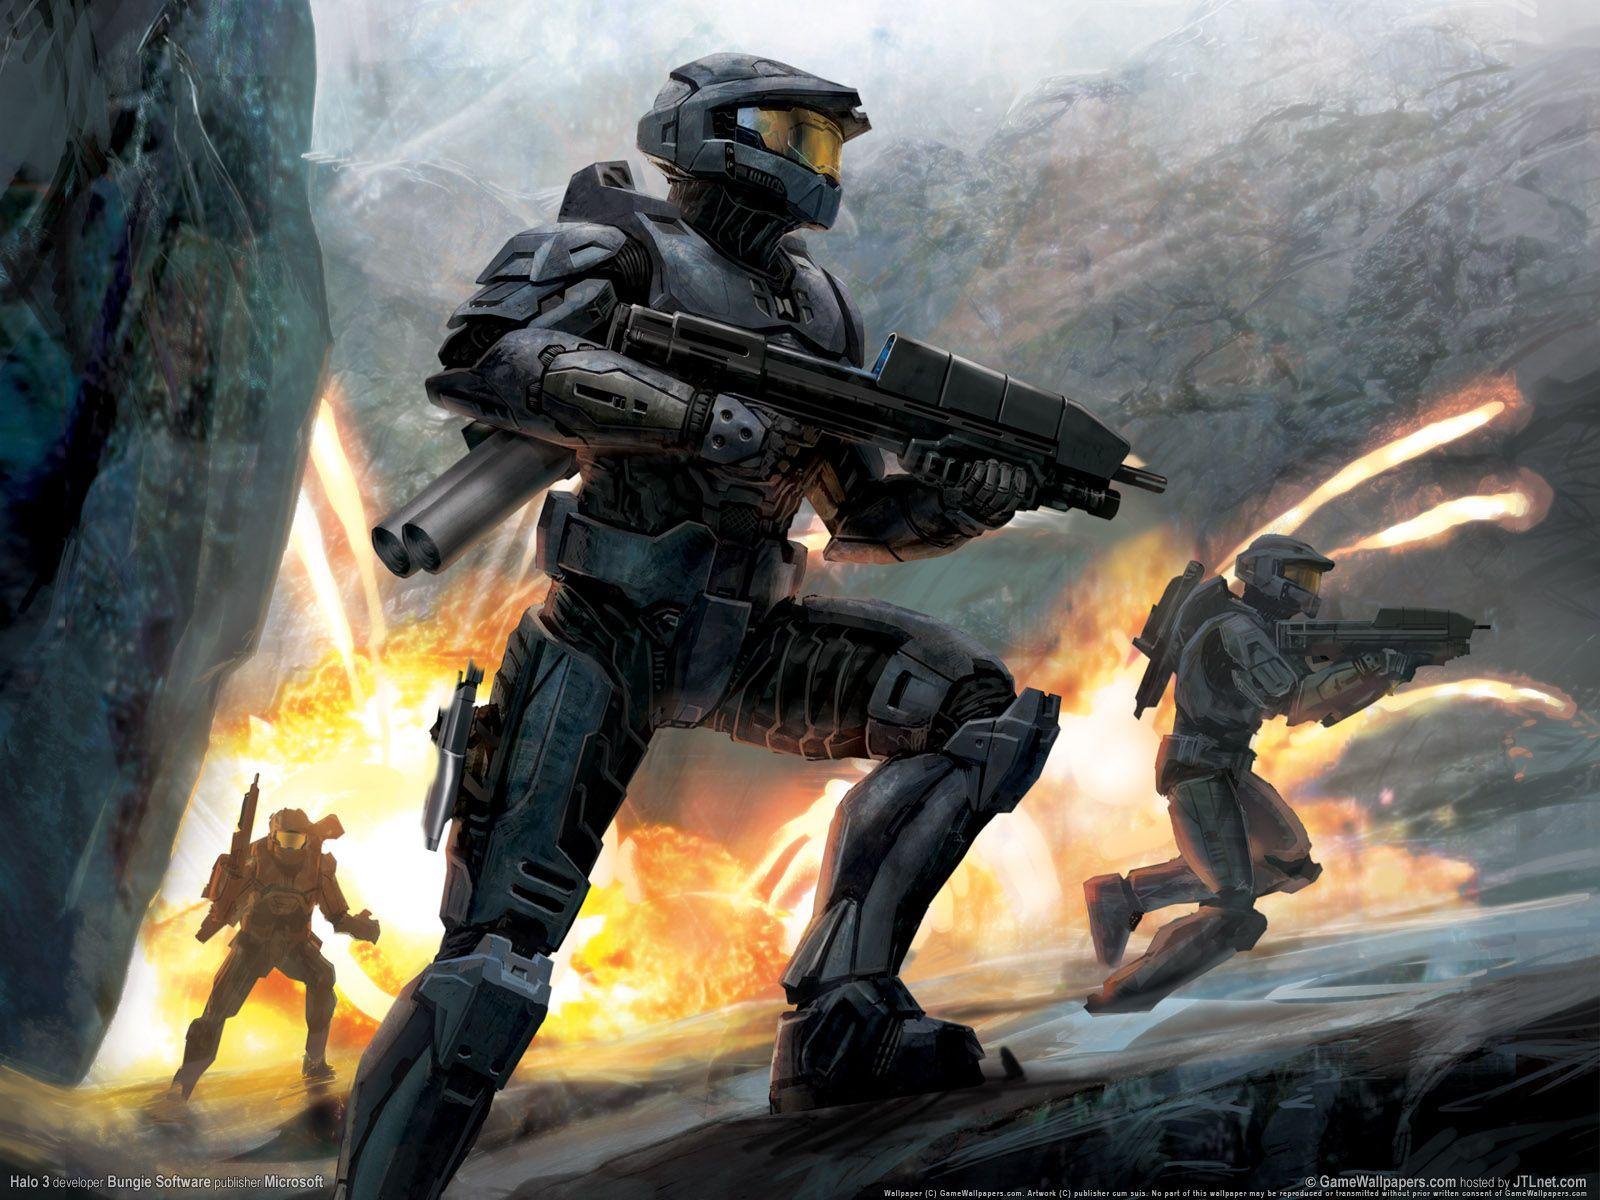 Halo 3 Master Chief Wallpaper Image & Picture